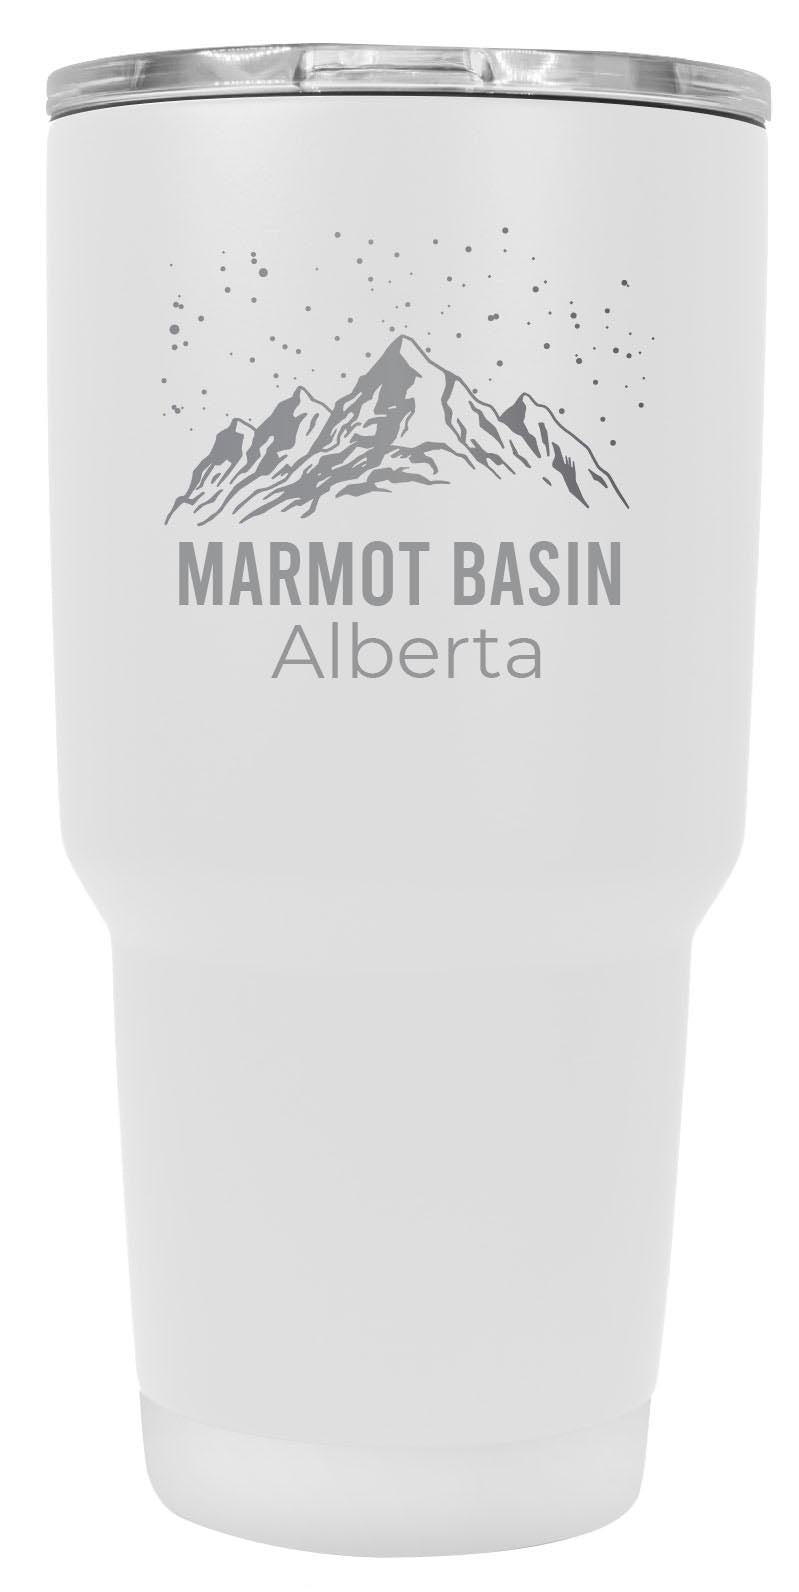 Marmot Basin Alberta Ski Snowboard Winter Souvenir Laser Engraved 24 oz Insulated Stainless Steel Tumbler